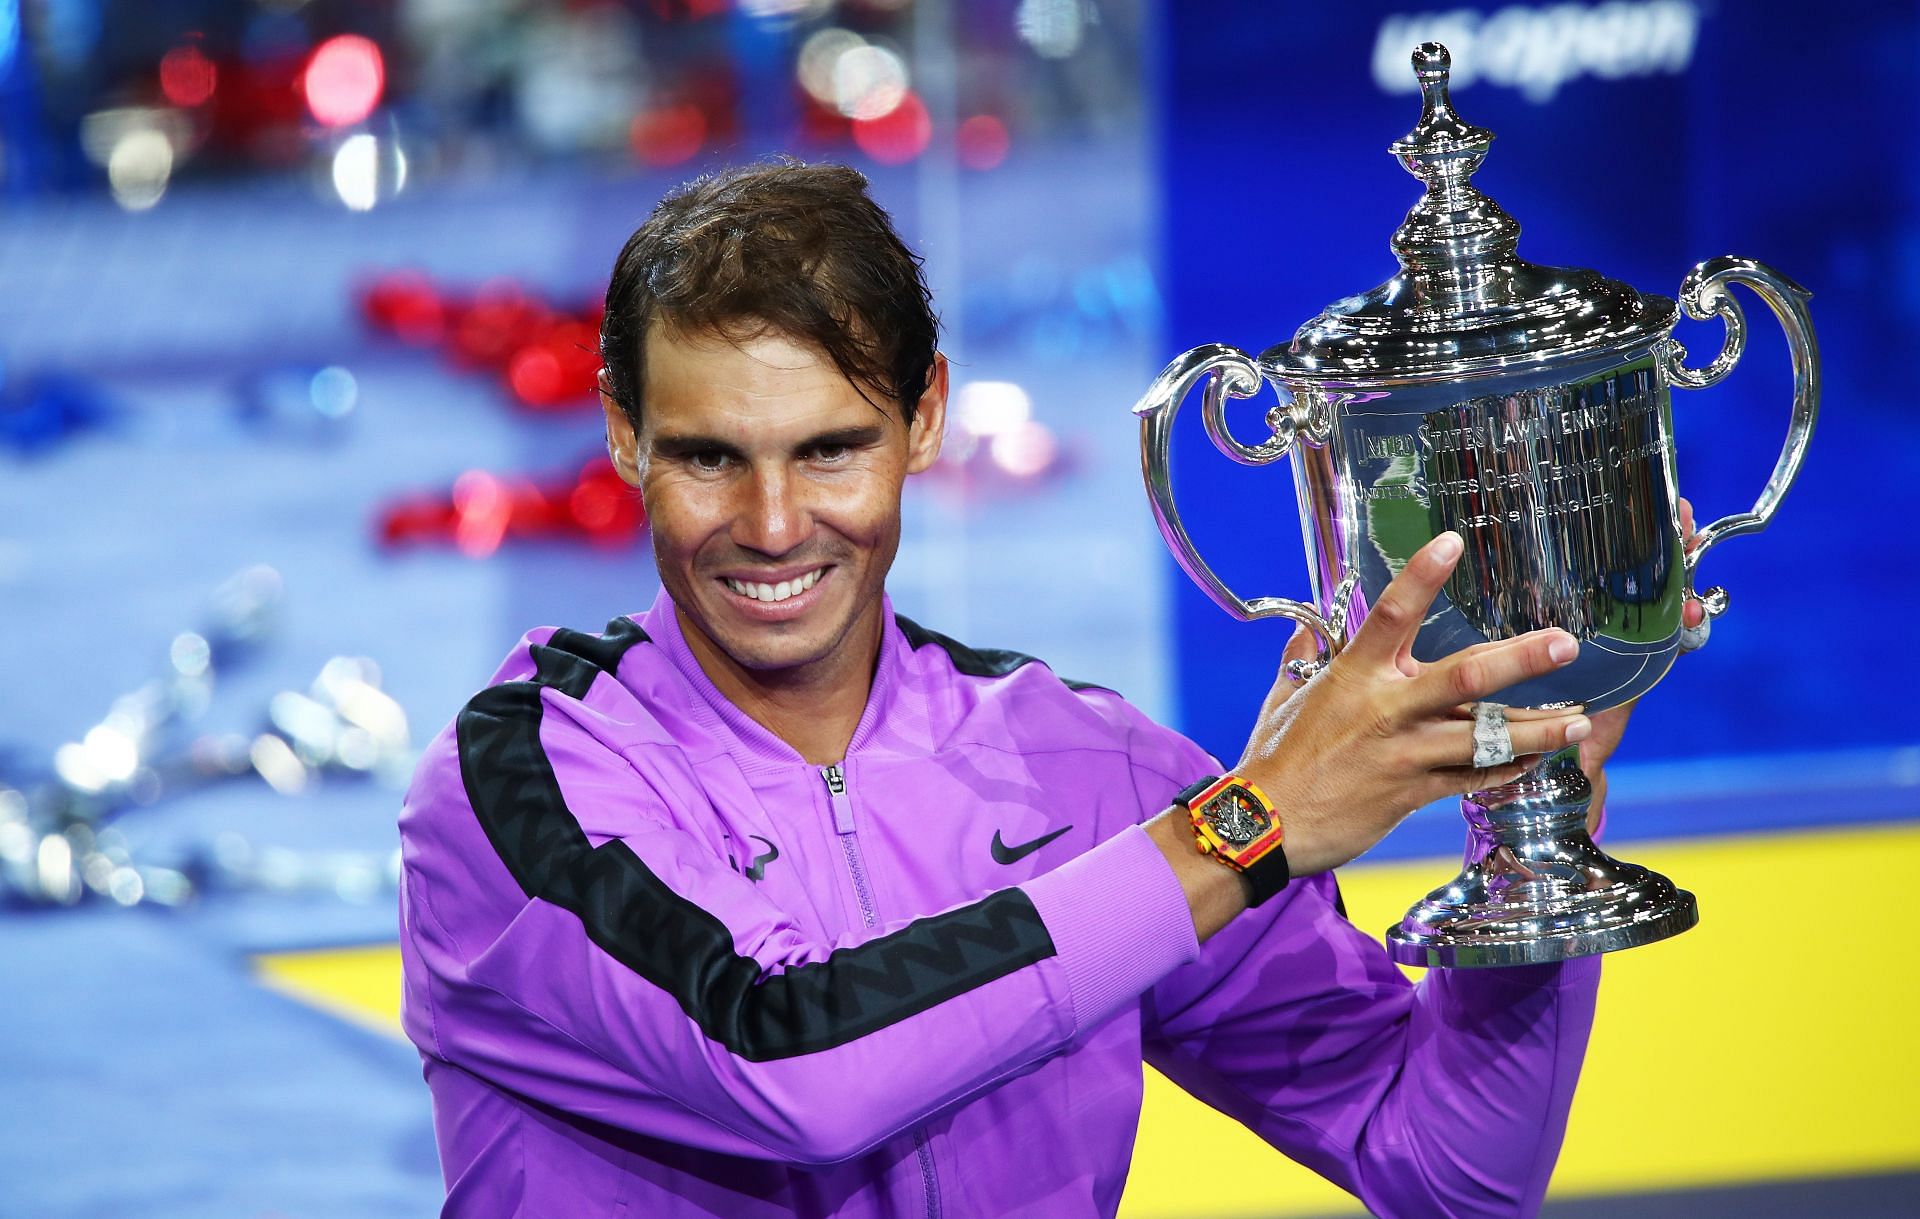 Rafael Nadal has won the US Open four times